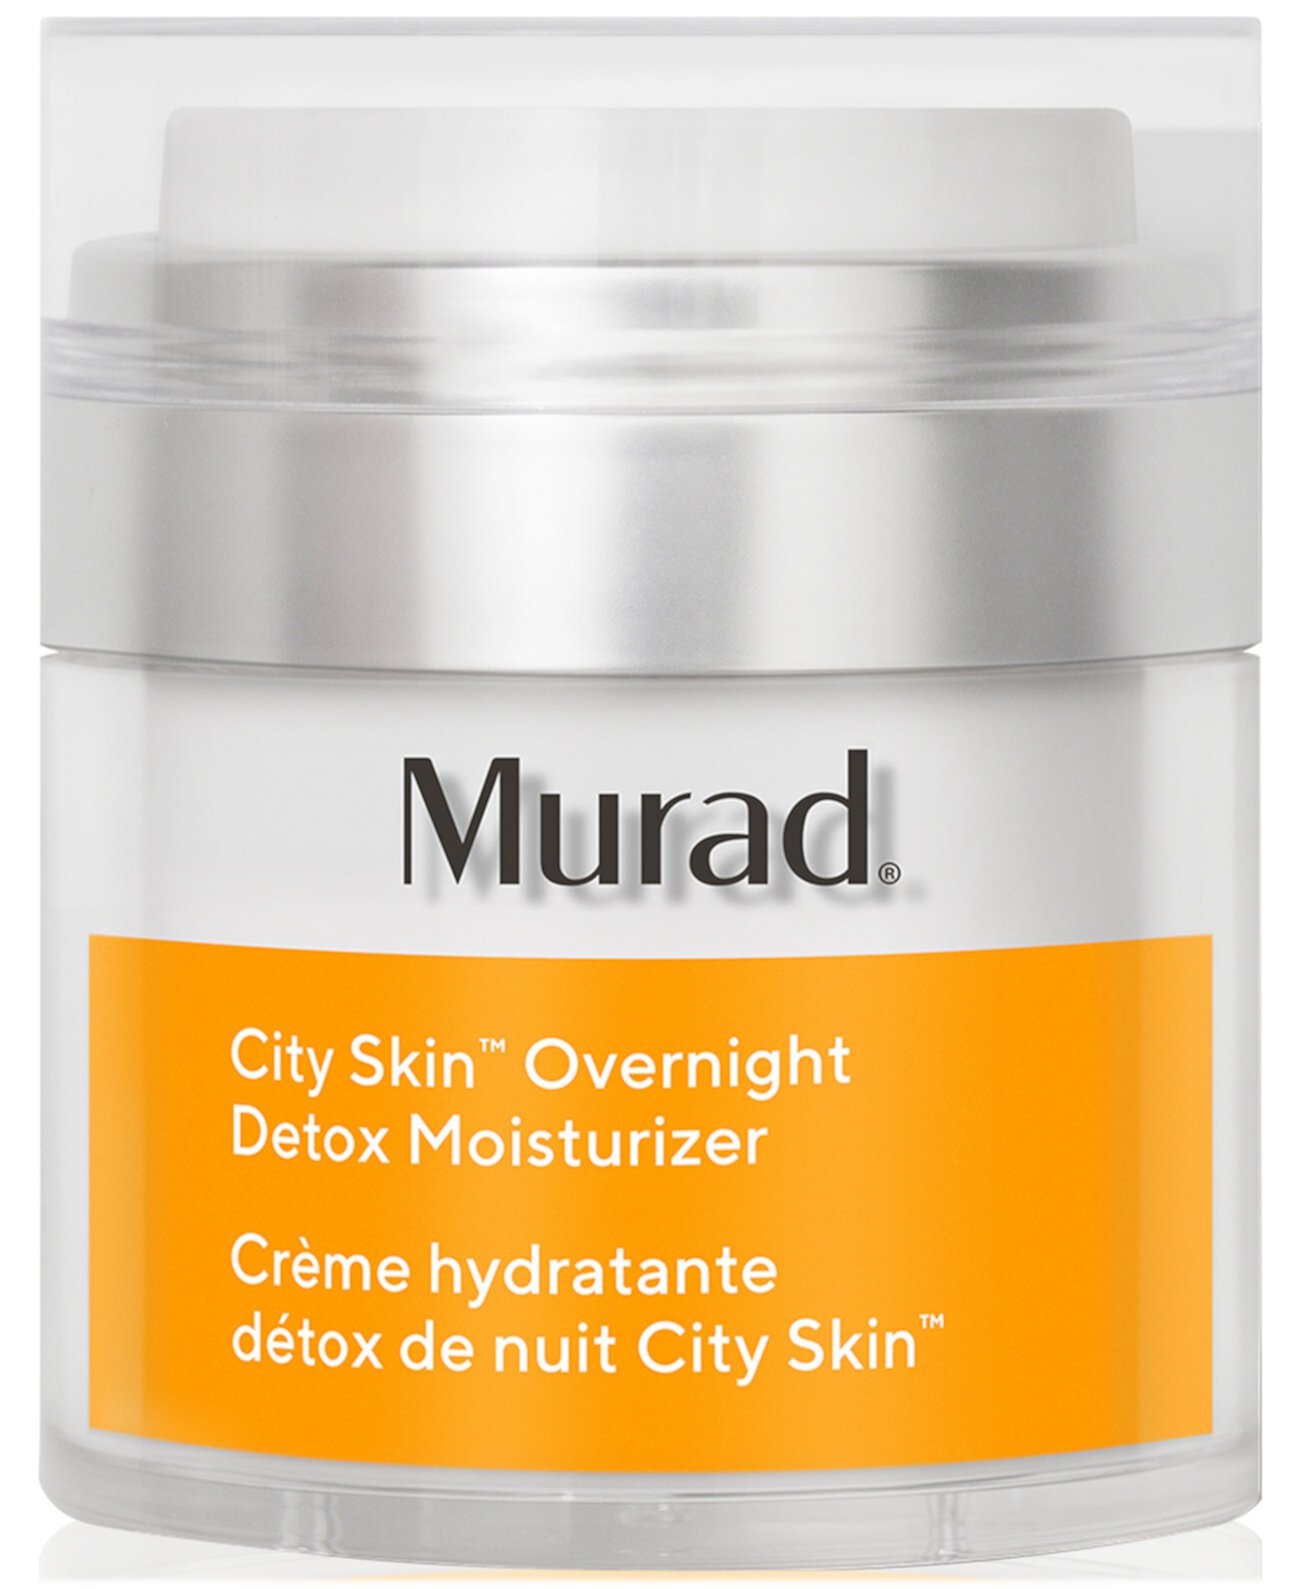 City Skin Overnight Detox Moisturizer, 1,7 эт. унция $ 12.99 Murad